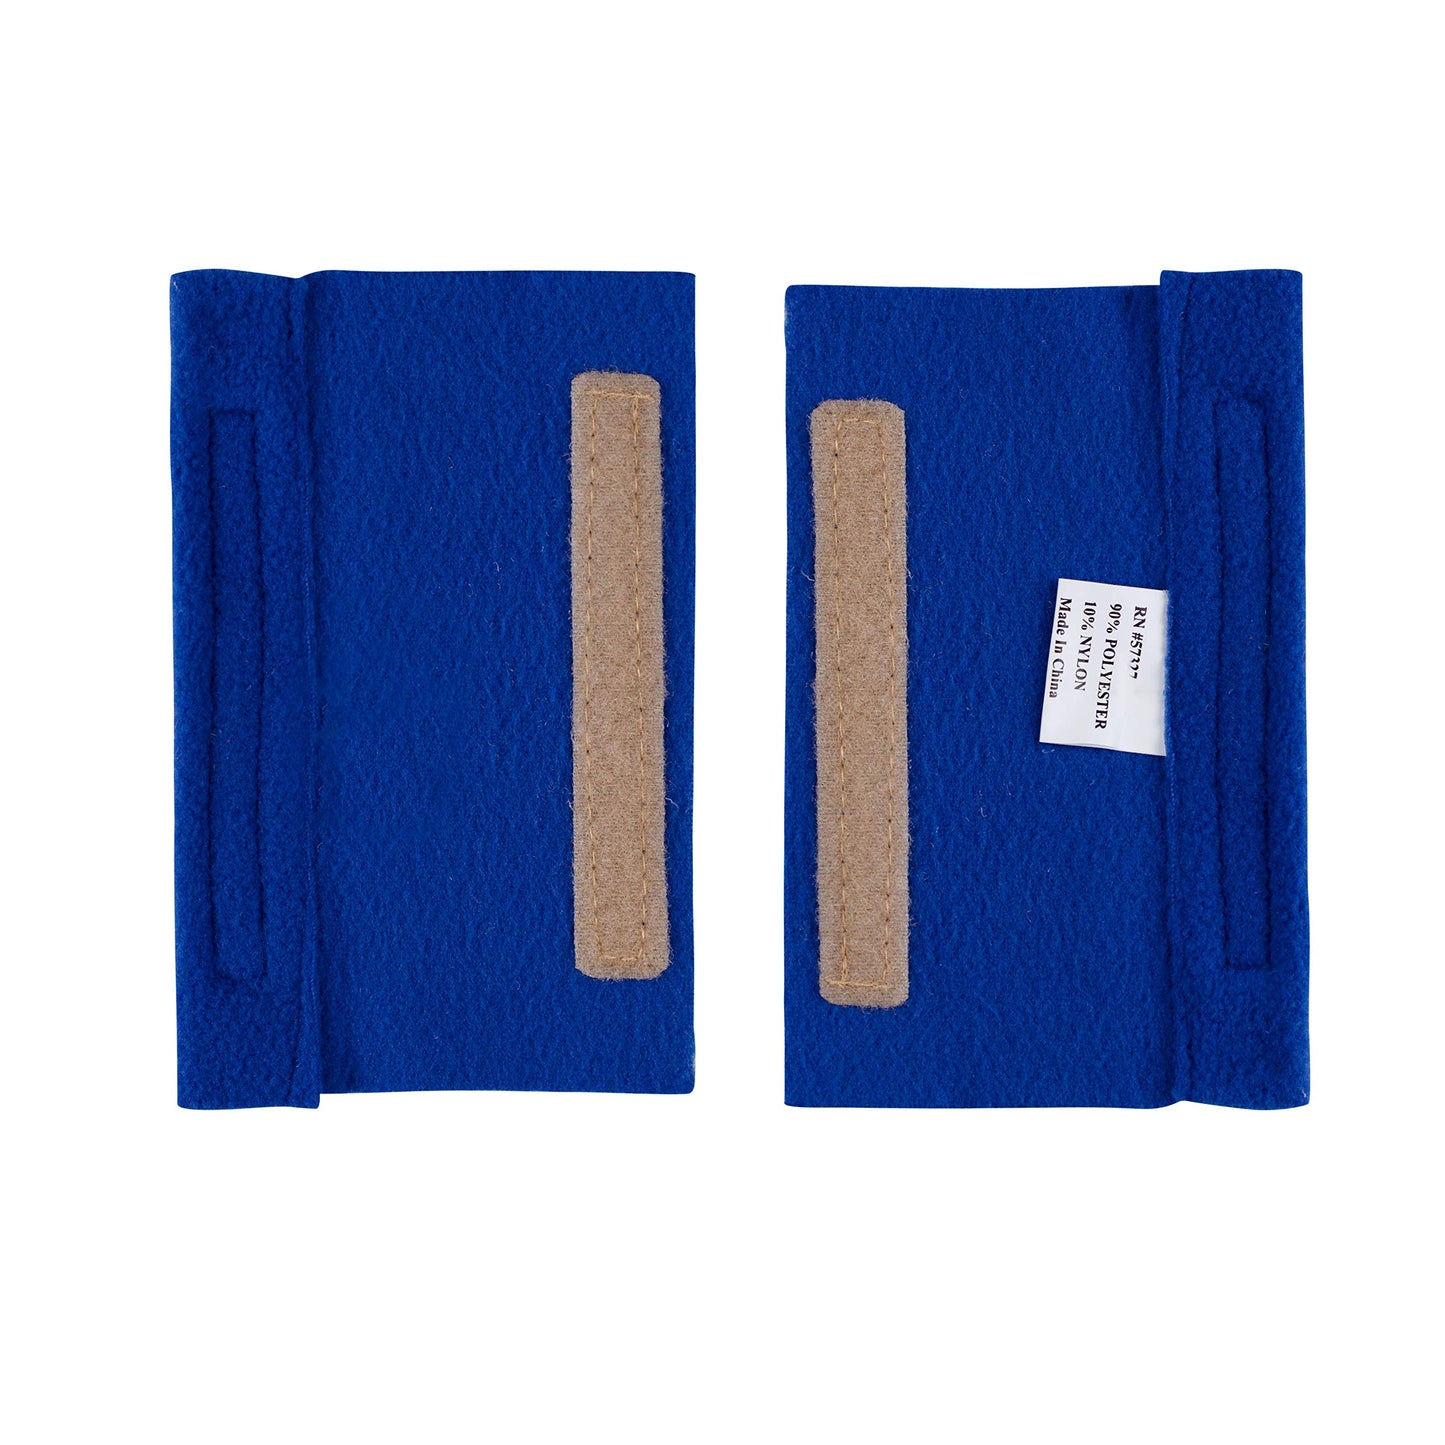 CPAP Comfort Pads (Blue)